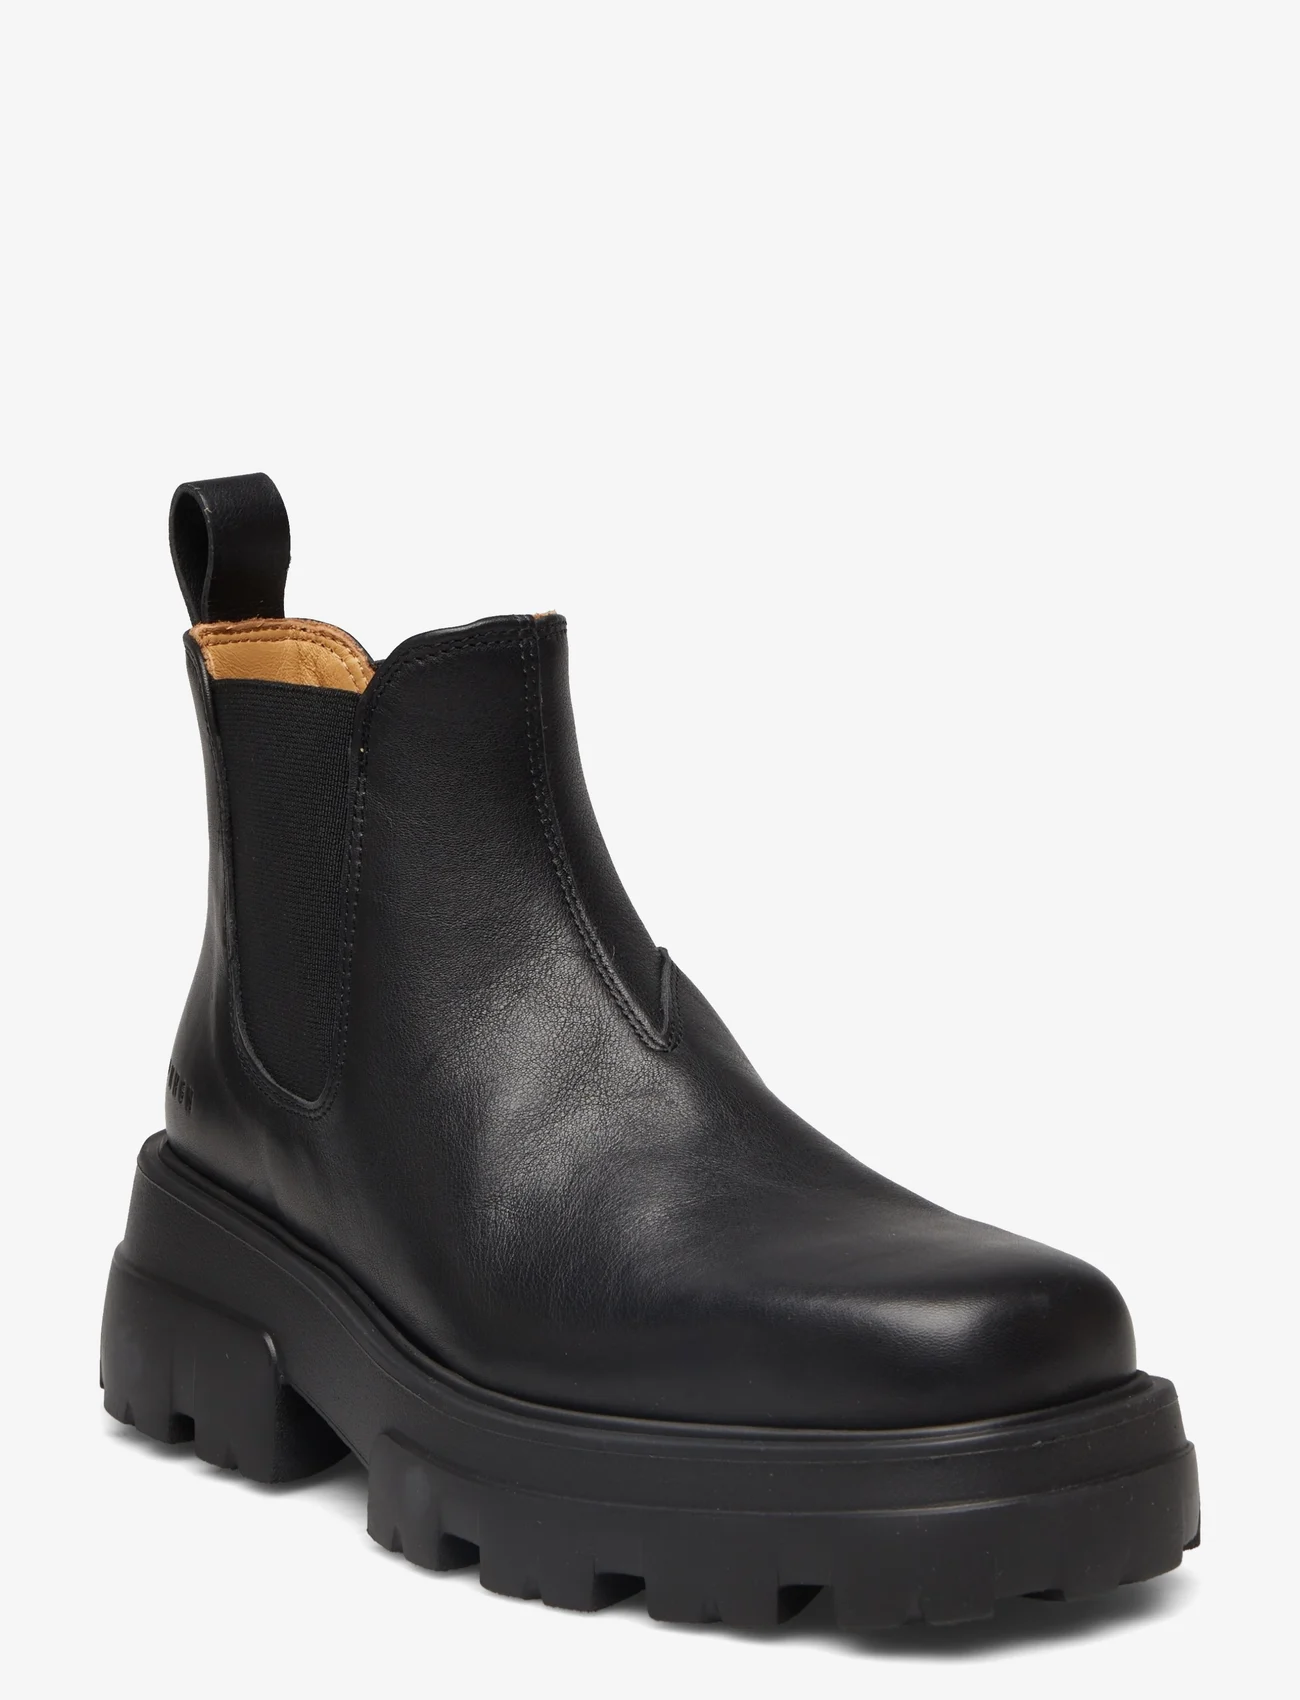 Copenhagen Studios - CPH155 - flat ankle boots - black - 0